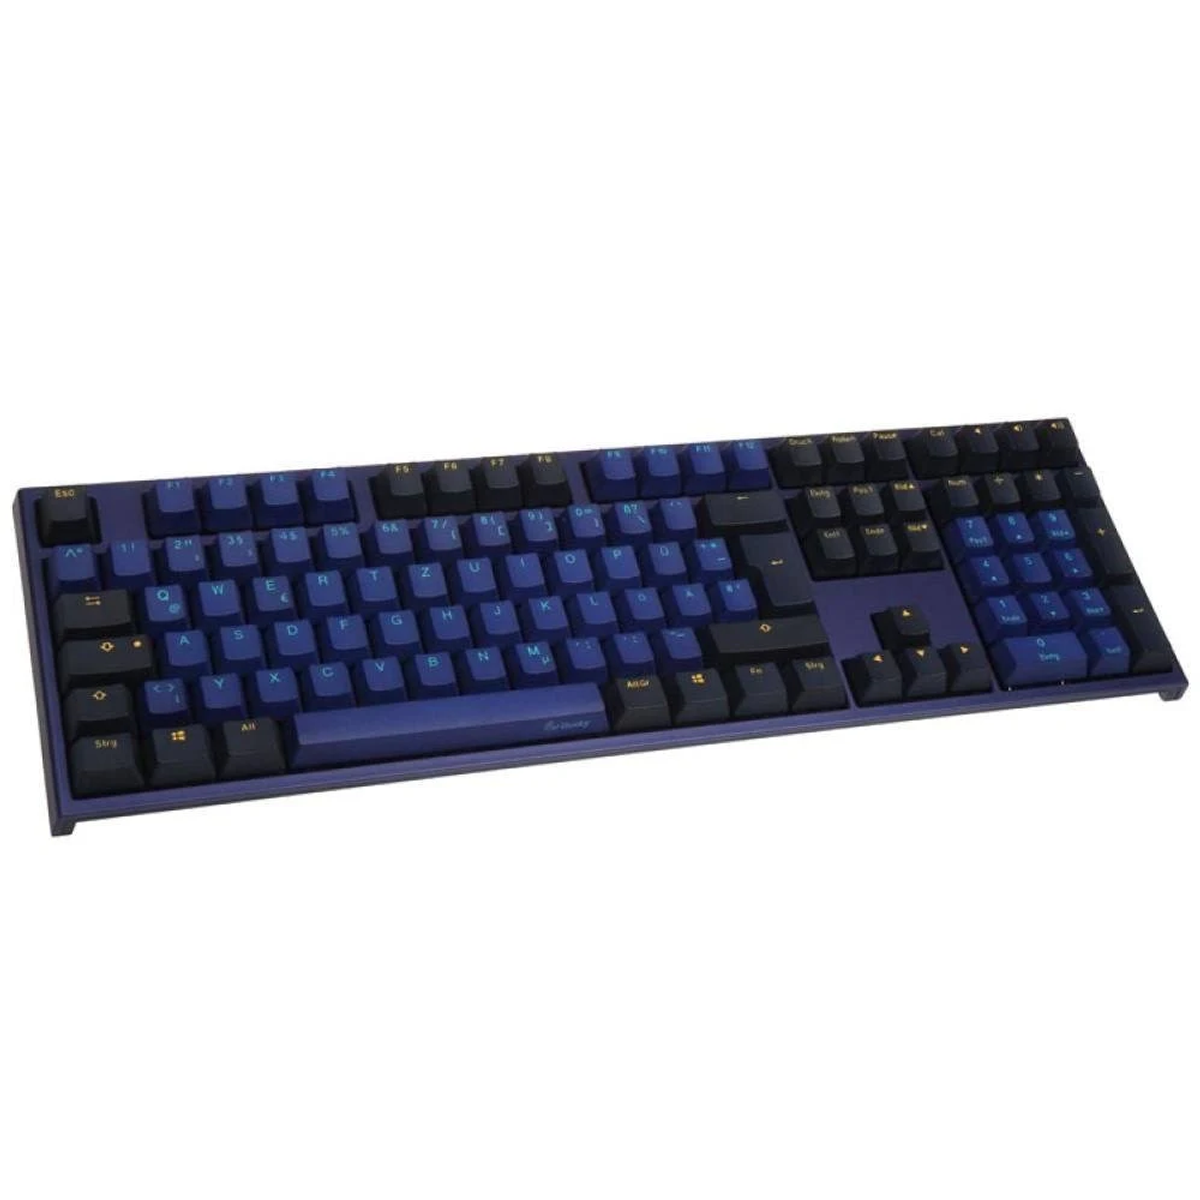 DKON1808-RDEPDZBBH, DUCKY Gaming Tastatur